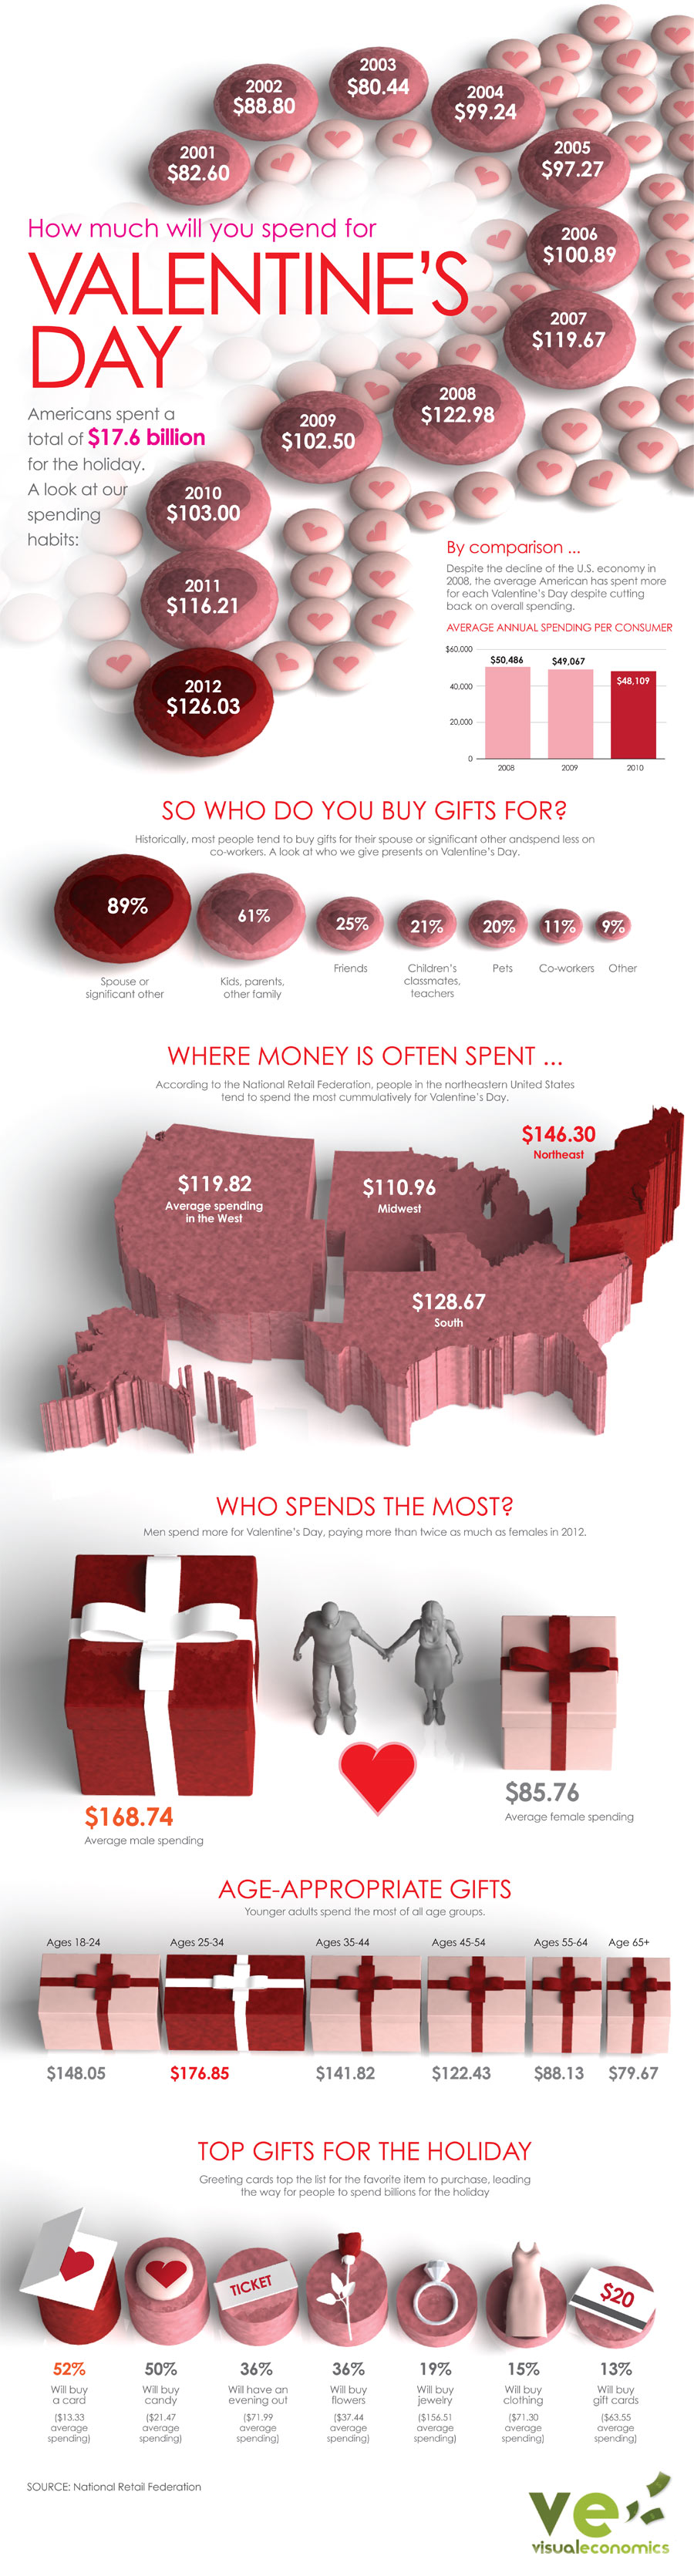 Valentines Day spending infographic